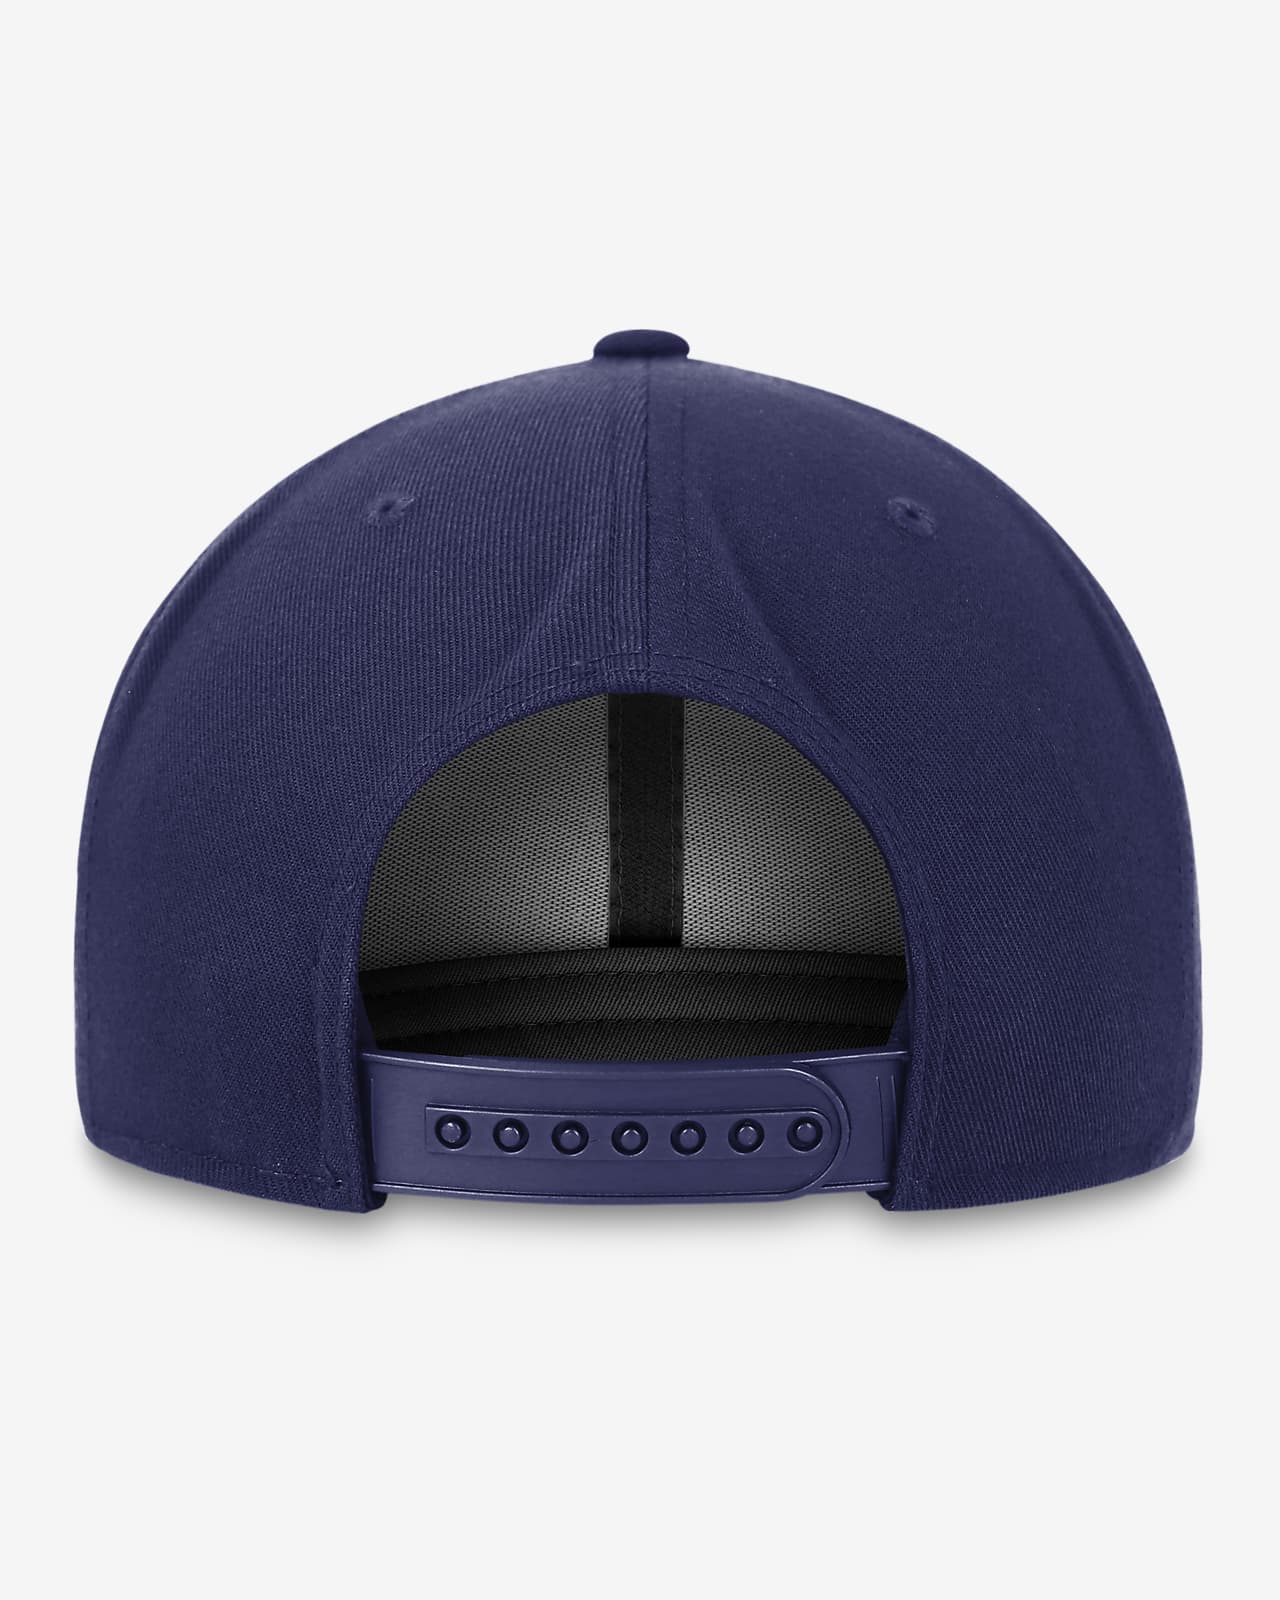 Los Angeles Dodgers Primetime Pro Men's Nike Dri-FIT MLB Adjustable Hat